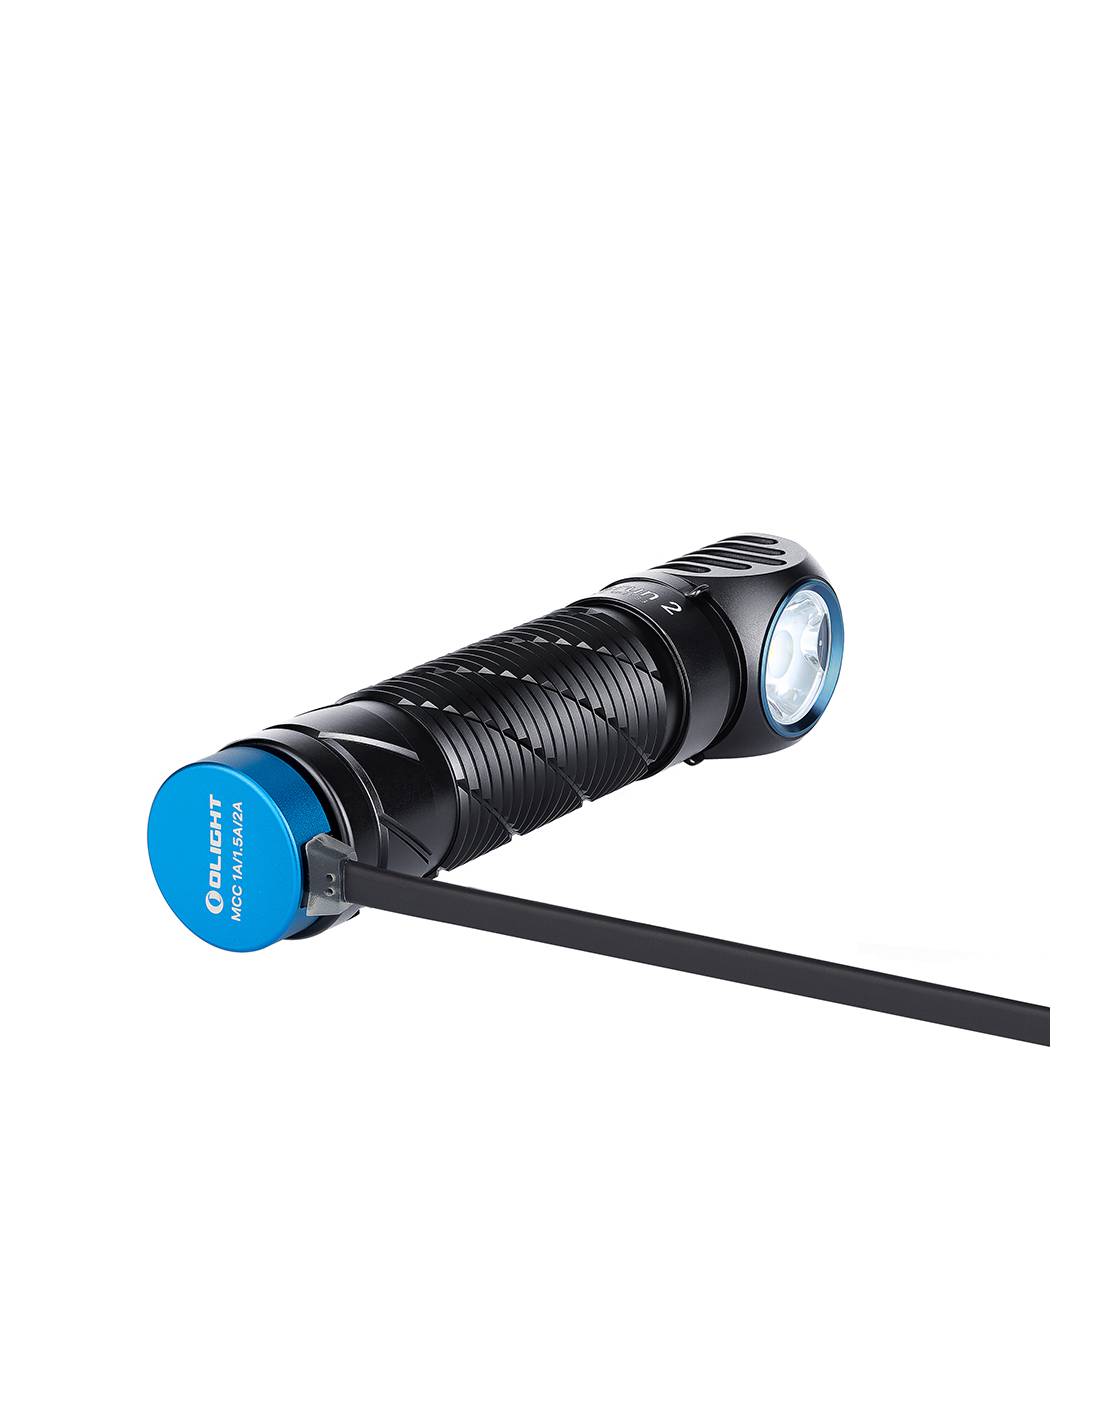 Perun 2 LED Flashlight with TIR Lens 2500 lum.